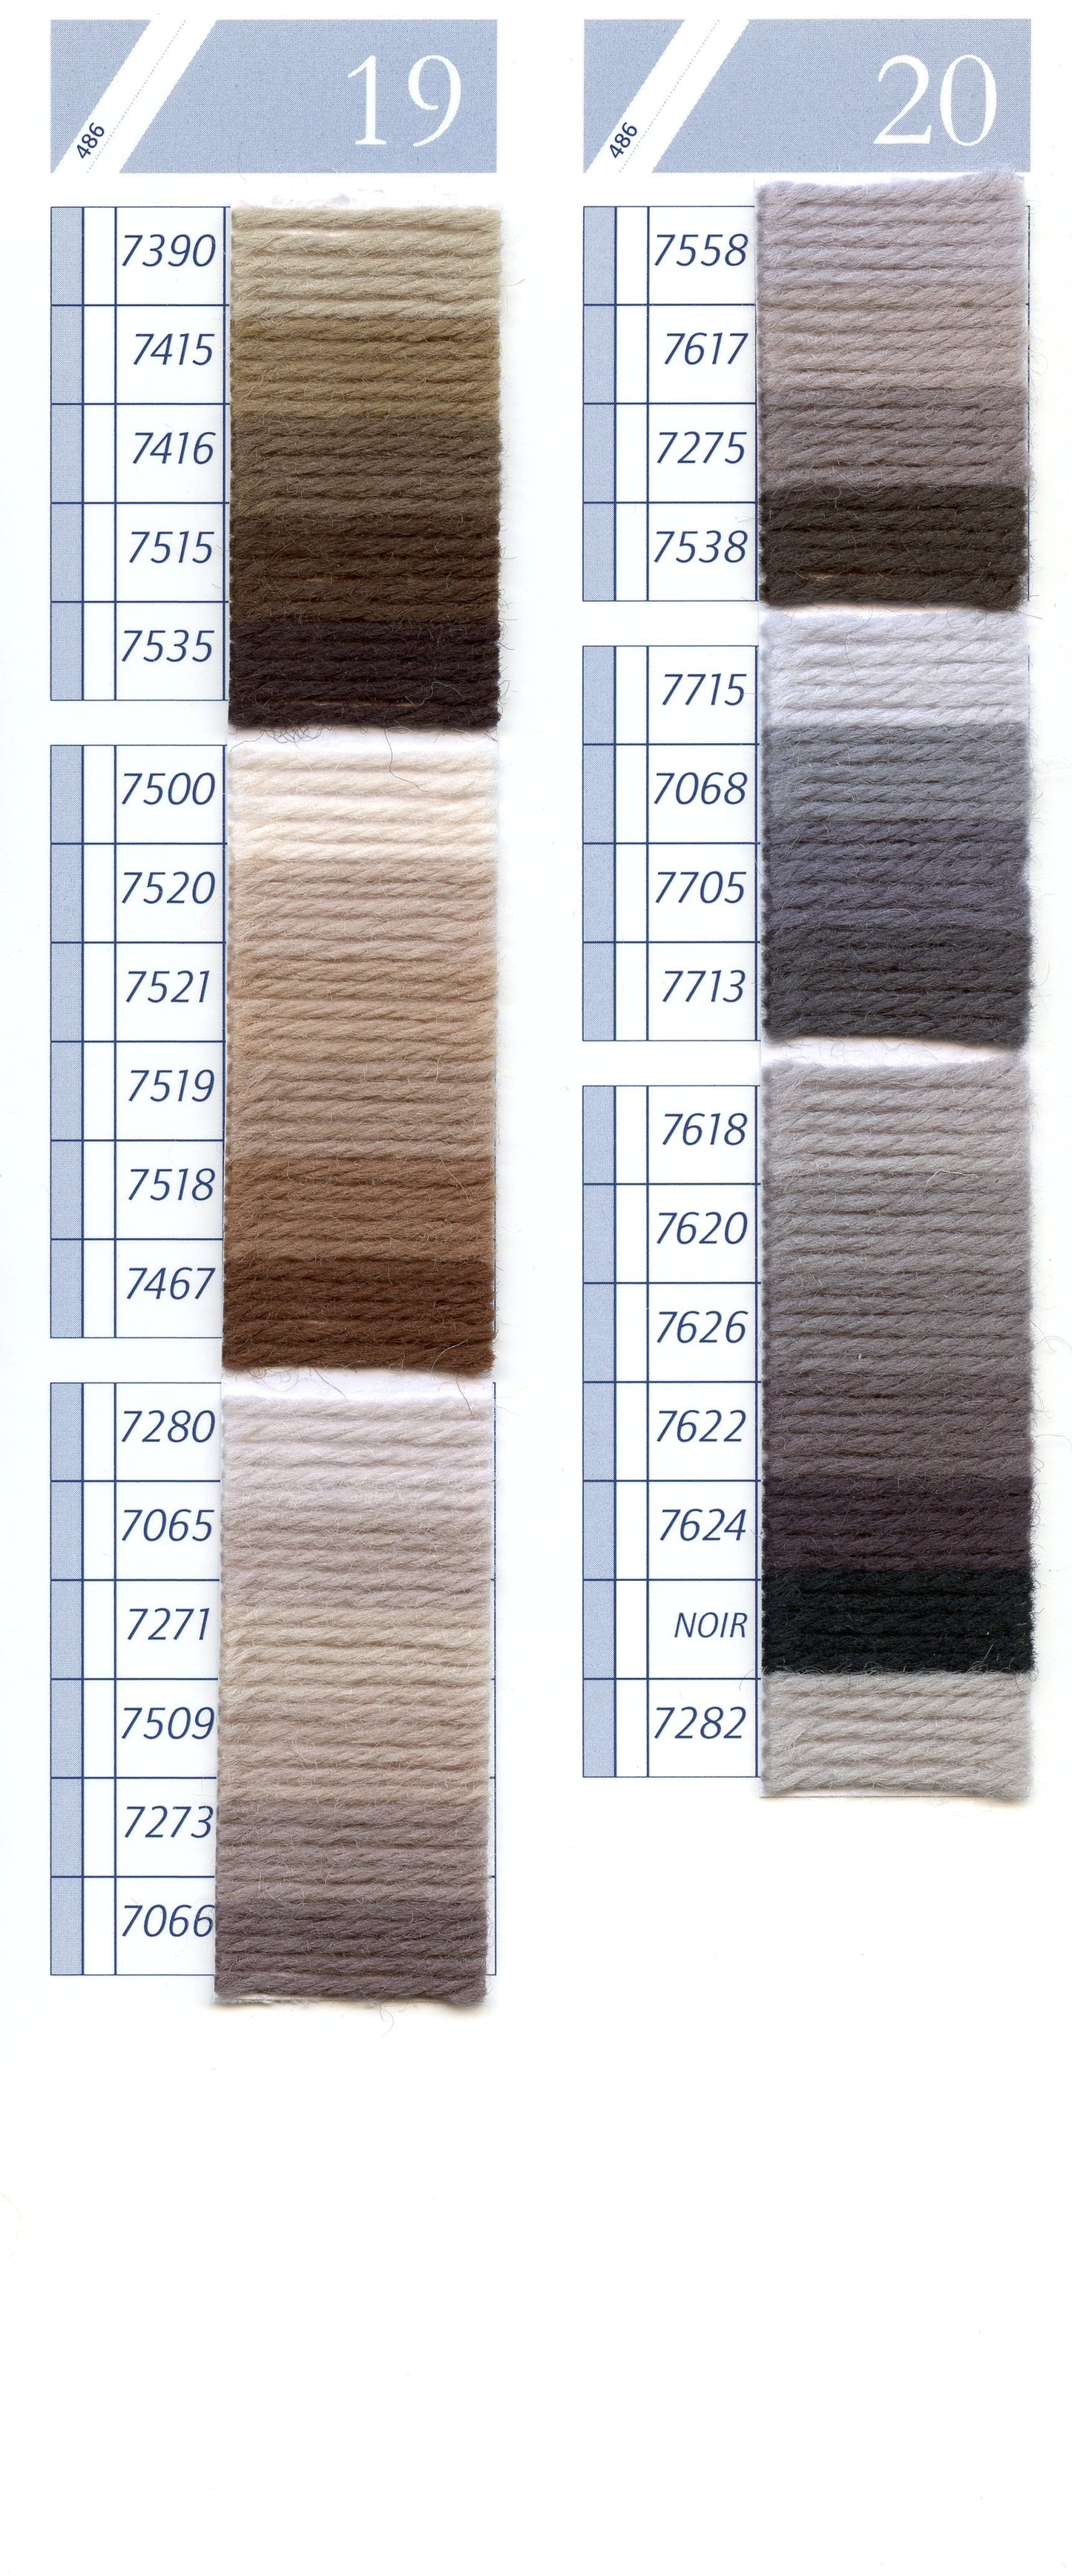 DMC Tapestry Wool Chart - Columns 19 & 20